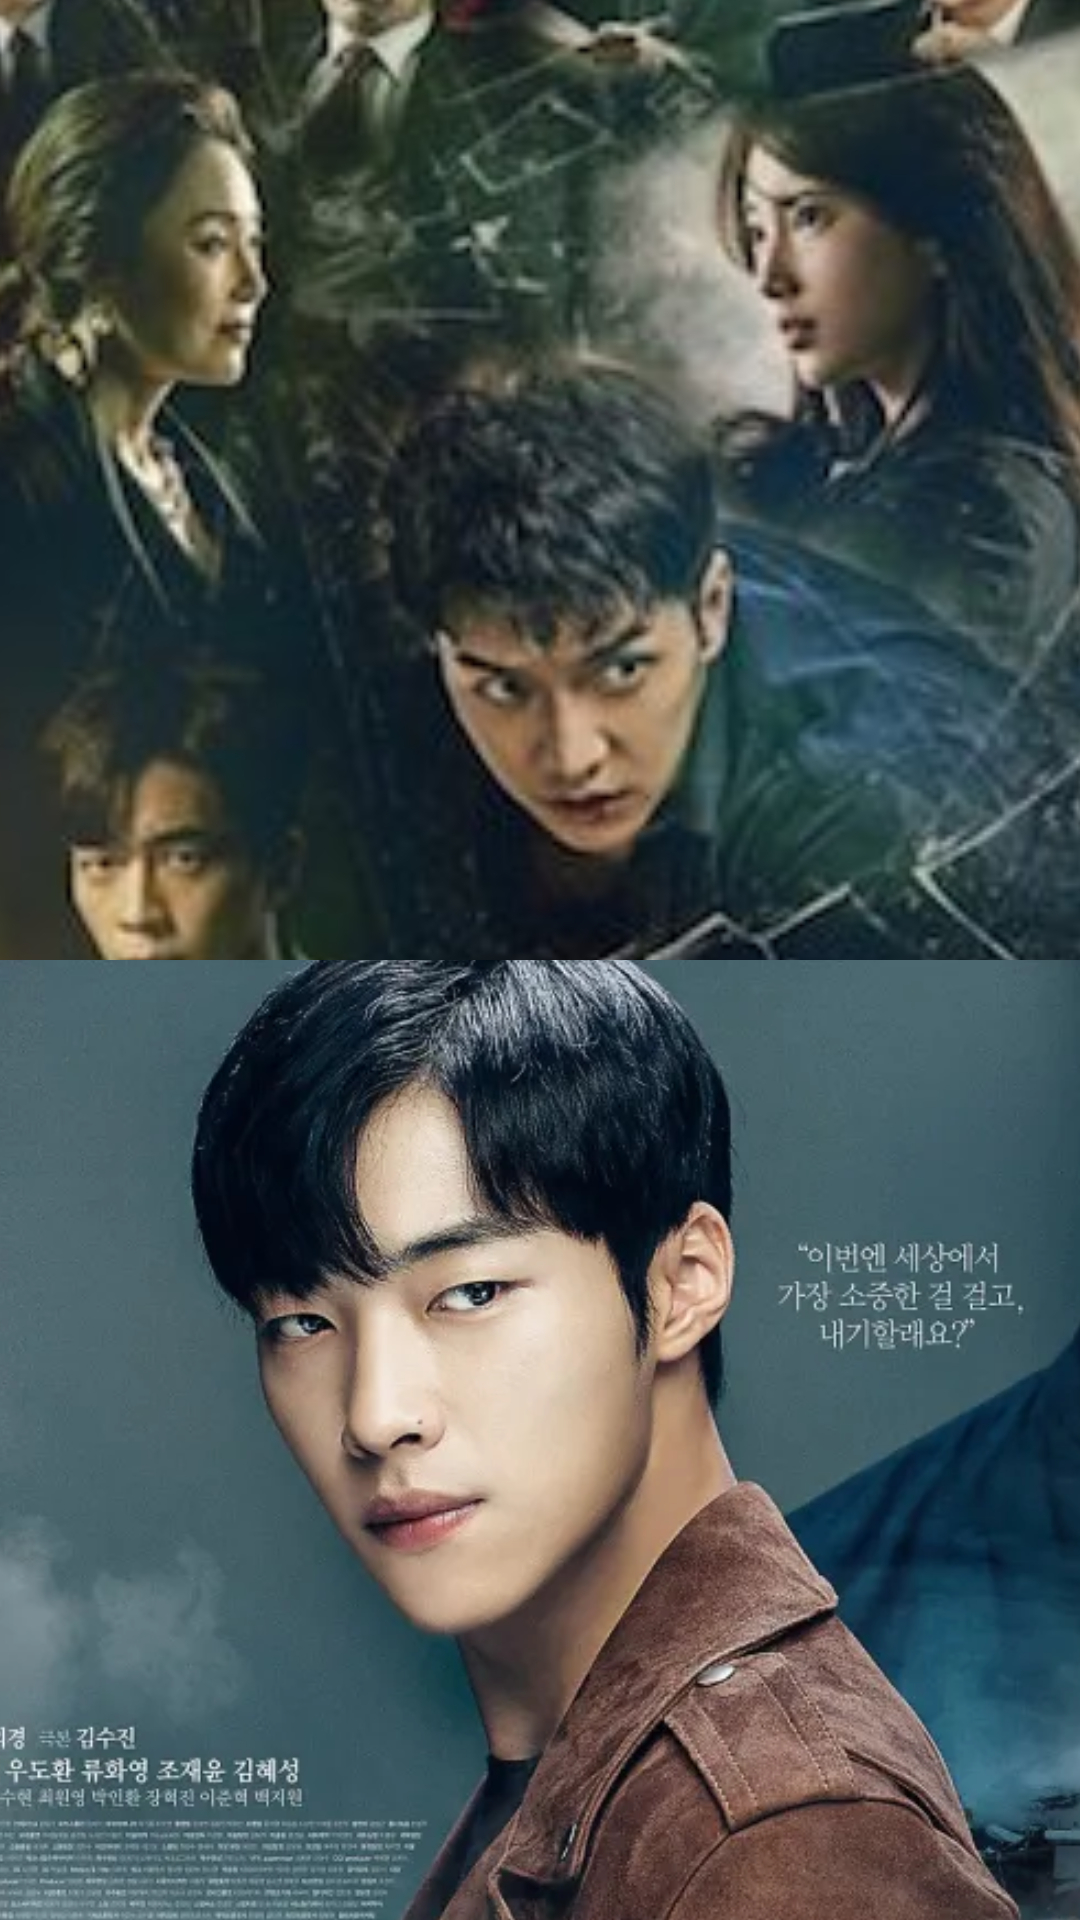 Vagabond to Mad Dog: 8 Korean crime dramas you can bingewatch